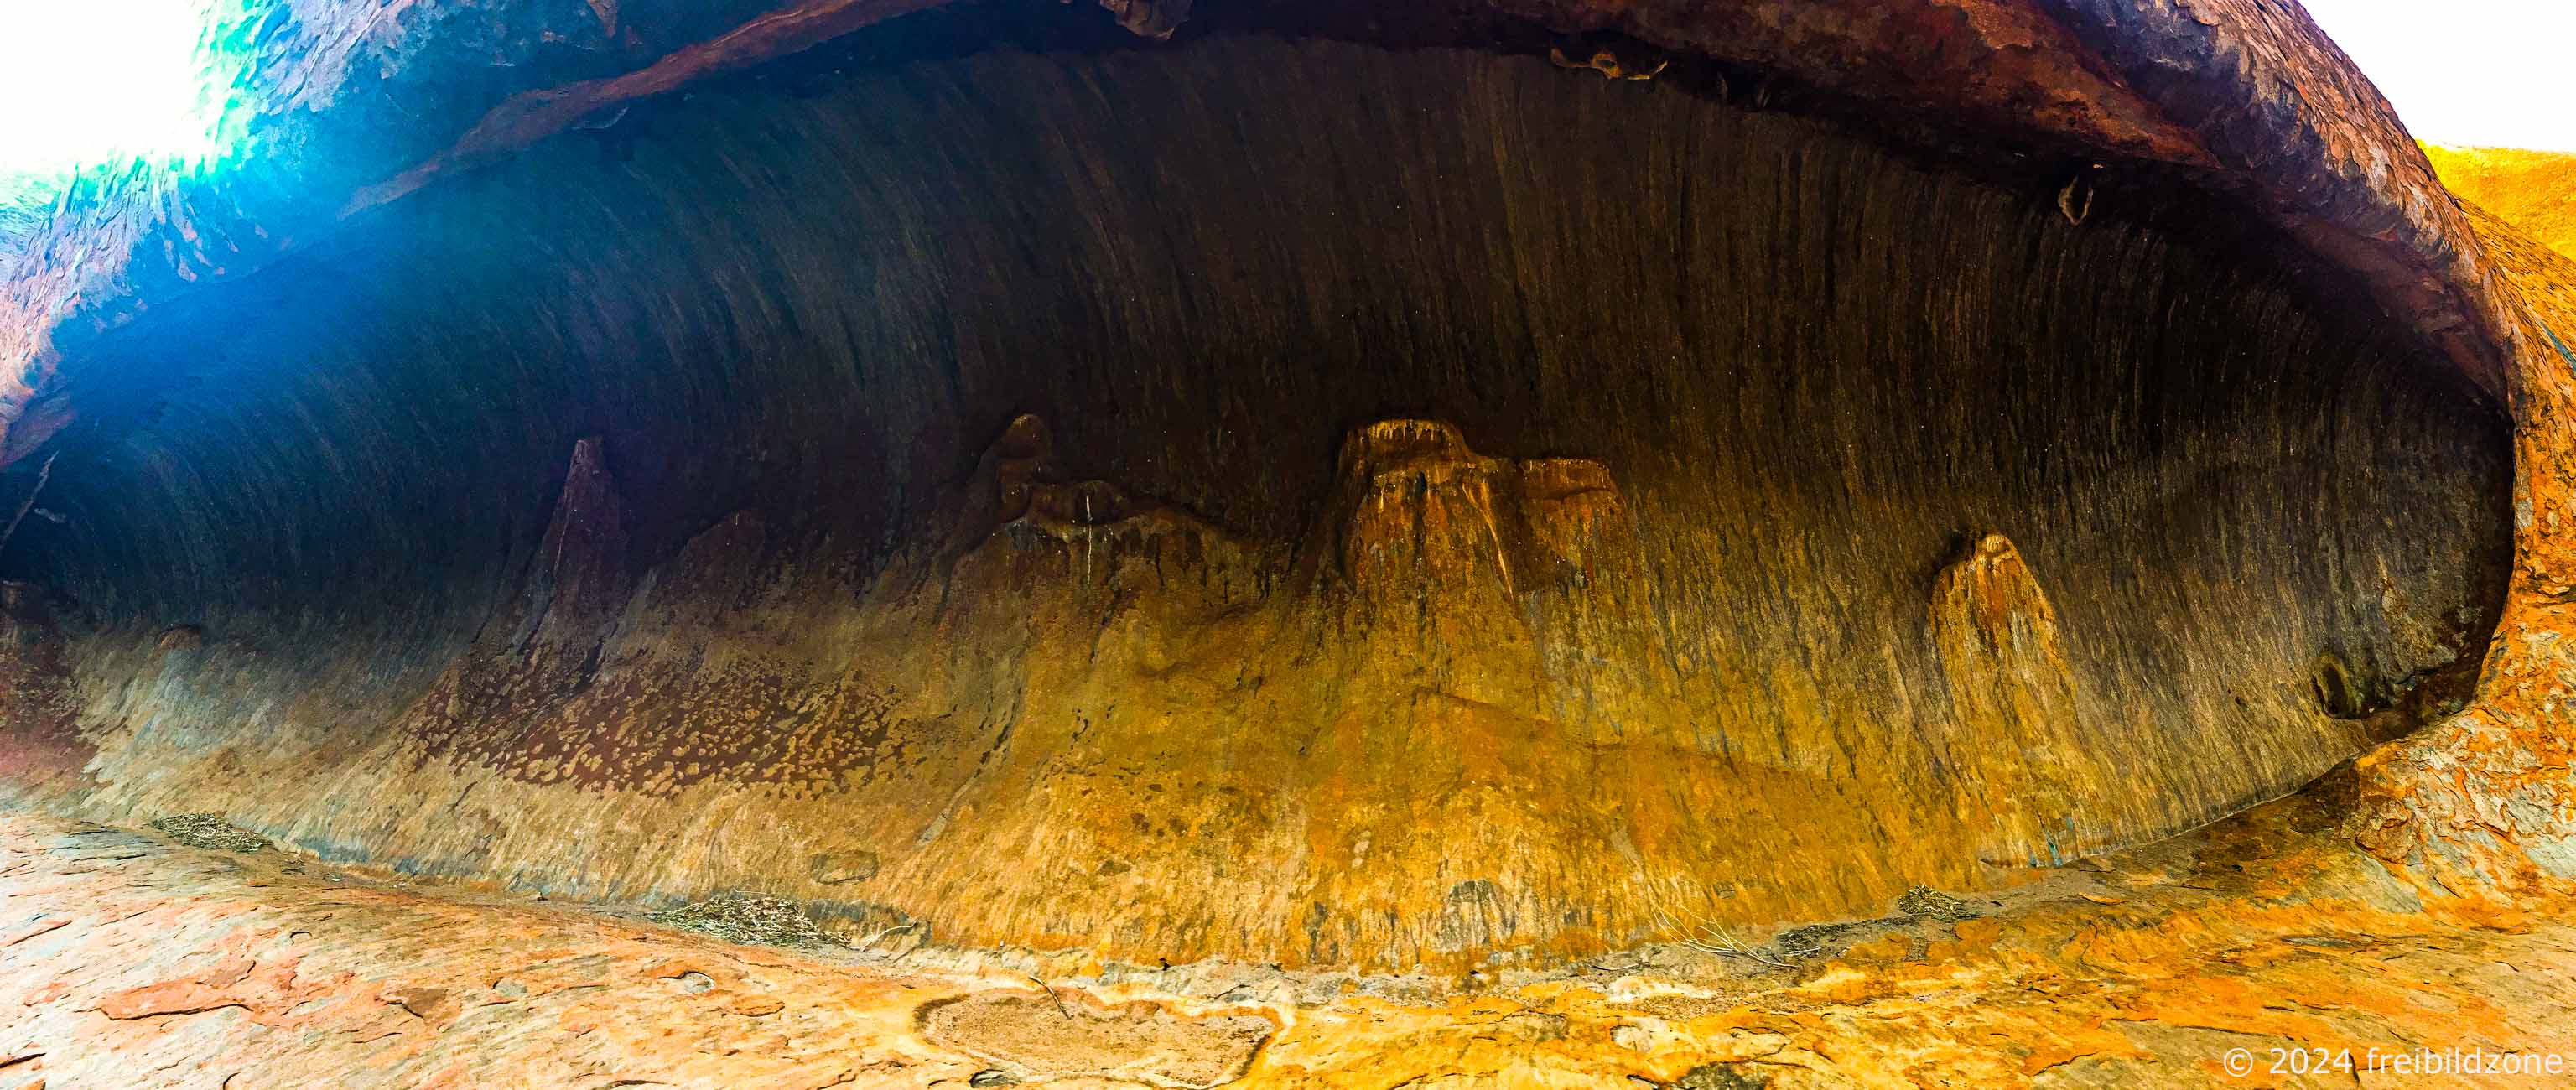 Aboriginal storytelling site, Uluru, Australia